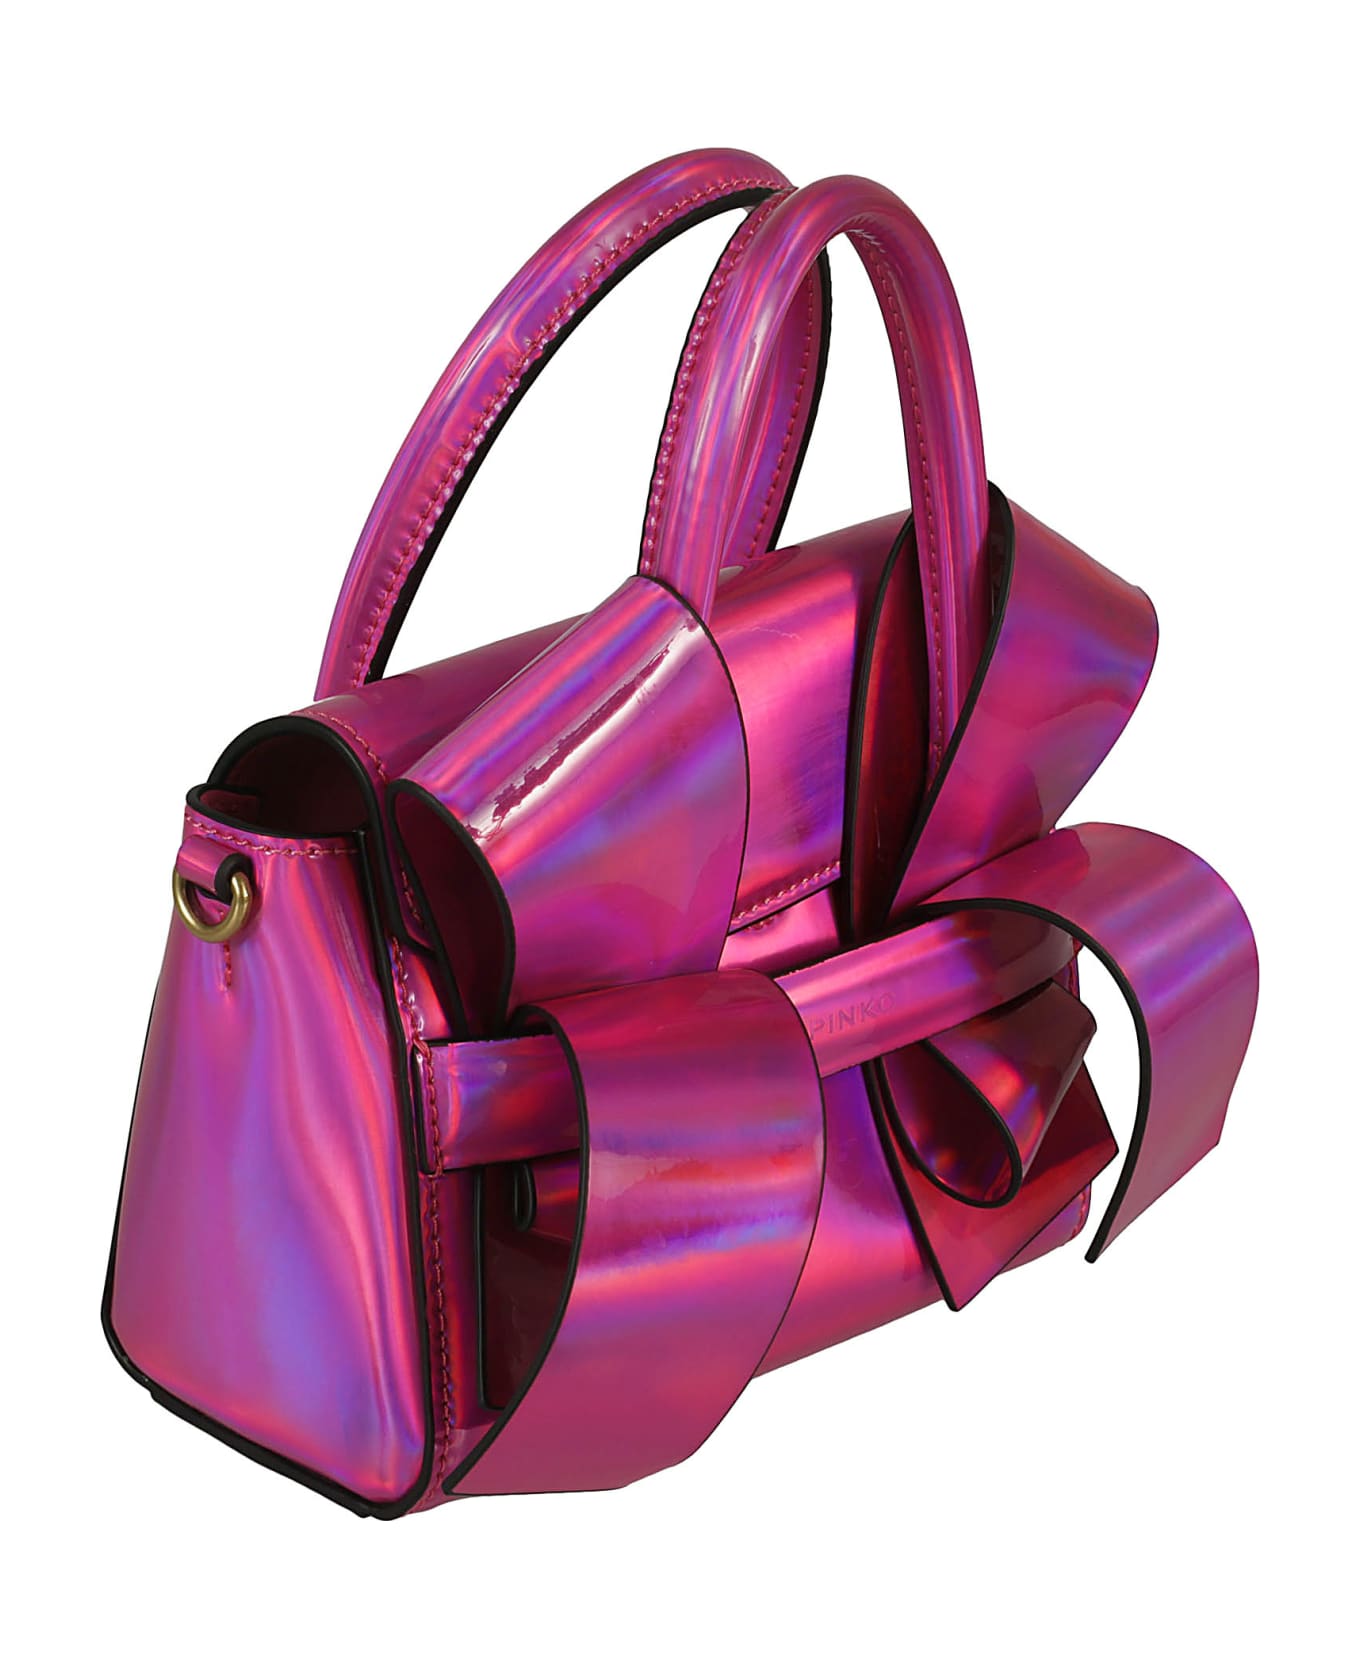 Pinko Aika Leather Handbag - Pink